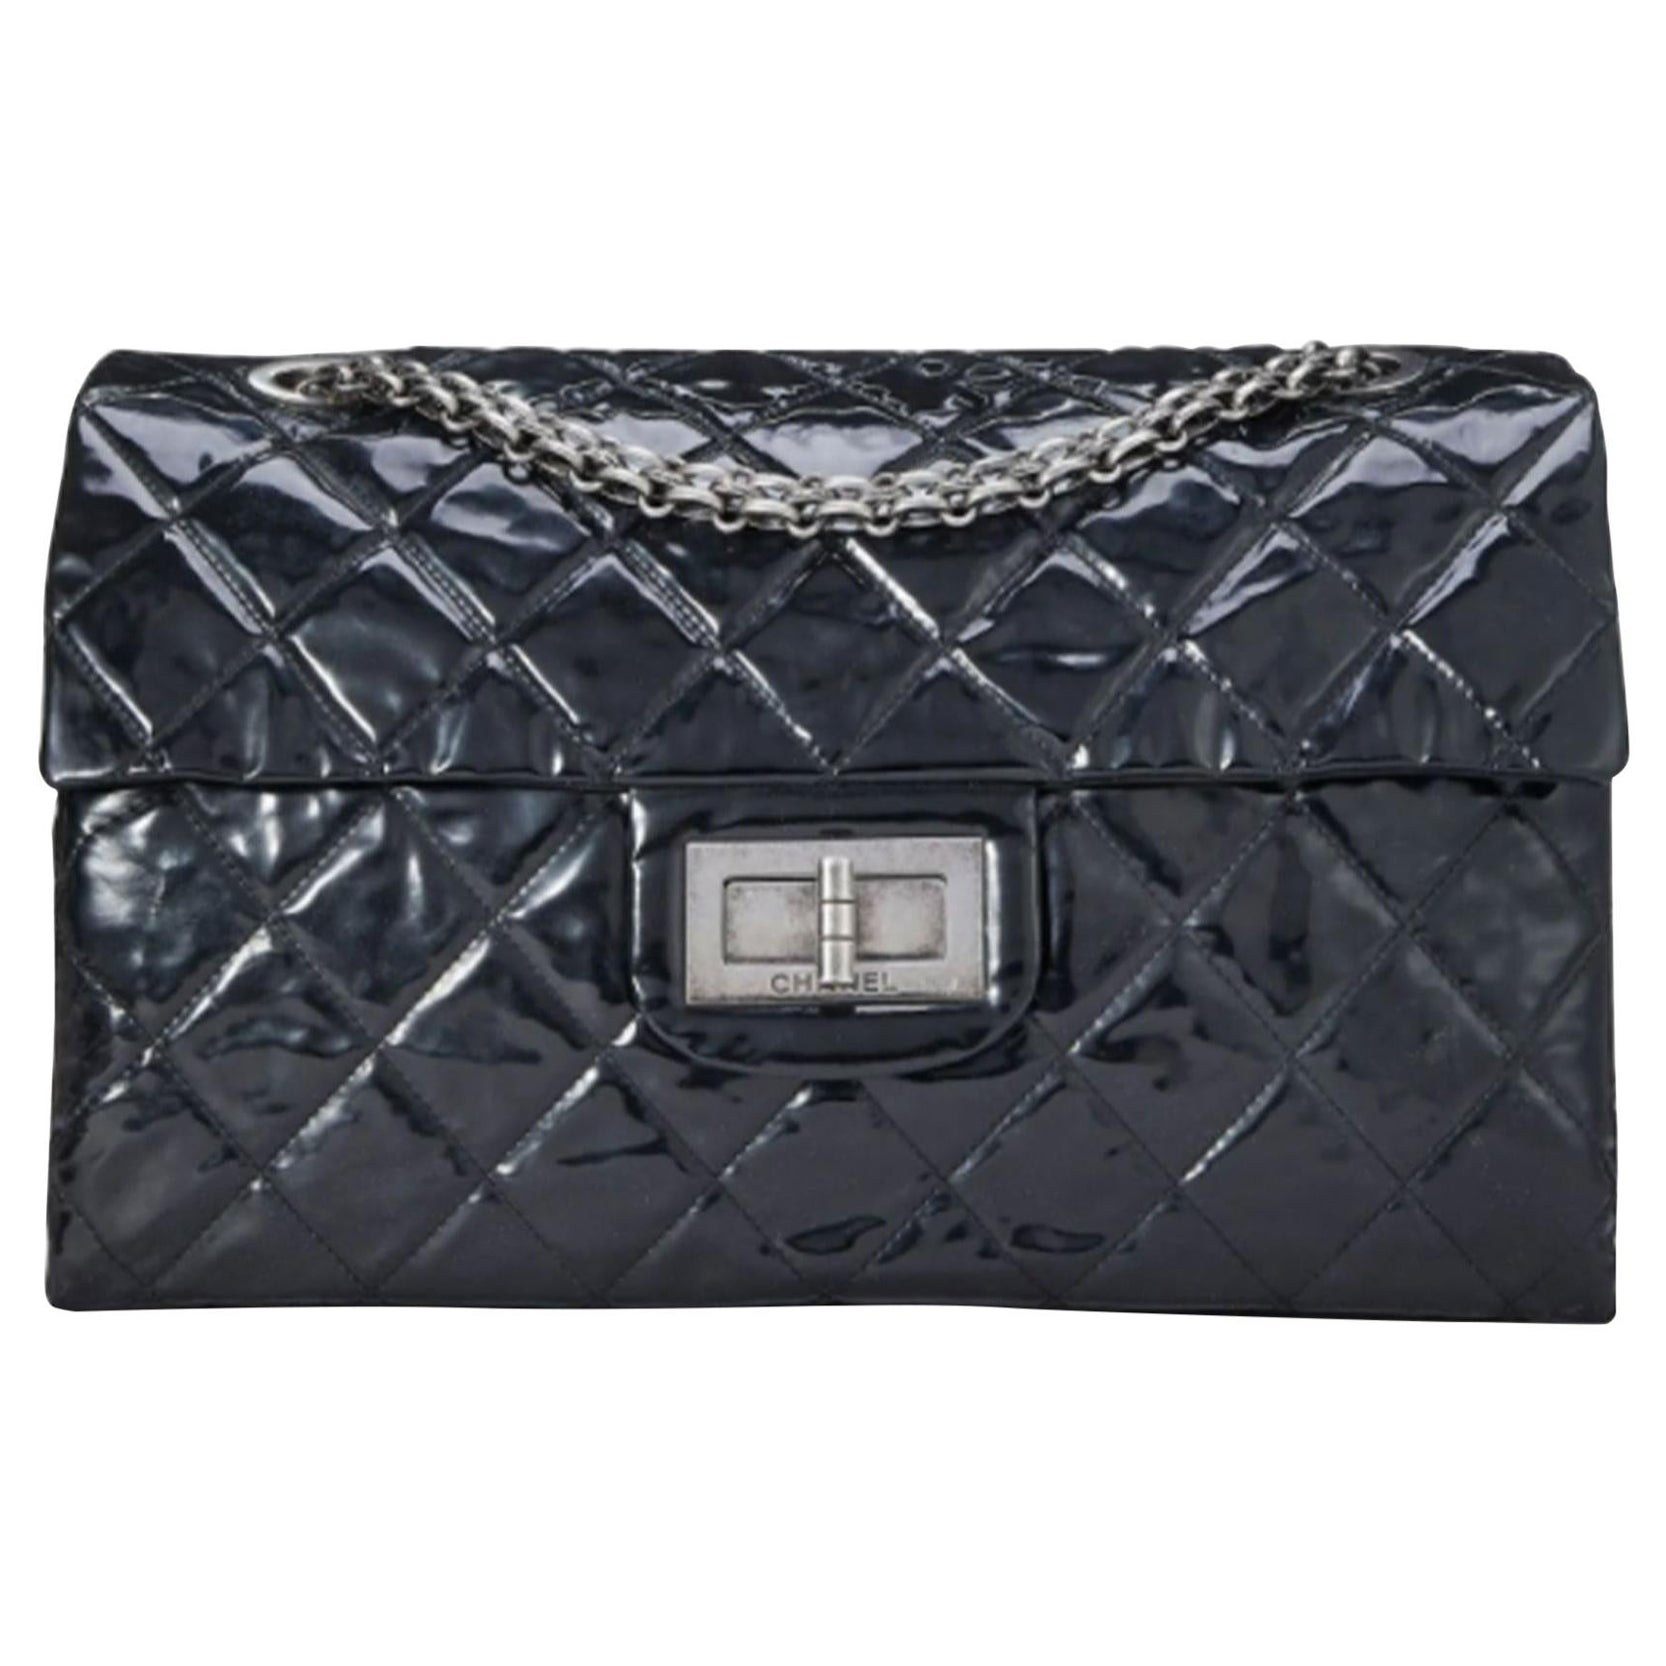 Chanel Vintage Black Quilted Patent Leather Reissue Flap Bag XL Shoulder Bag